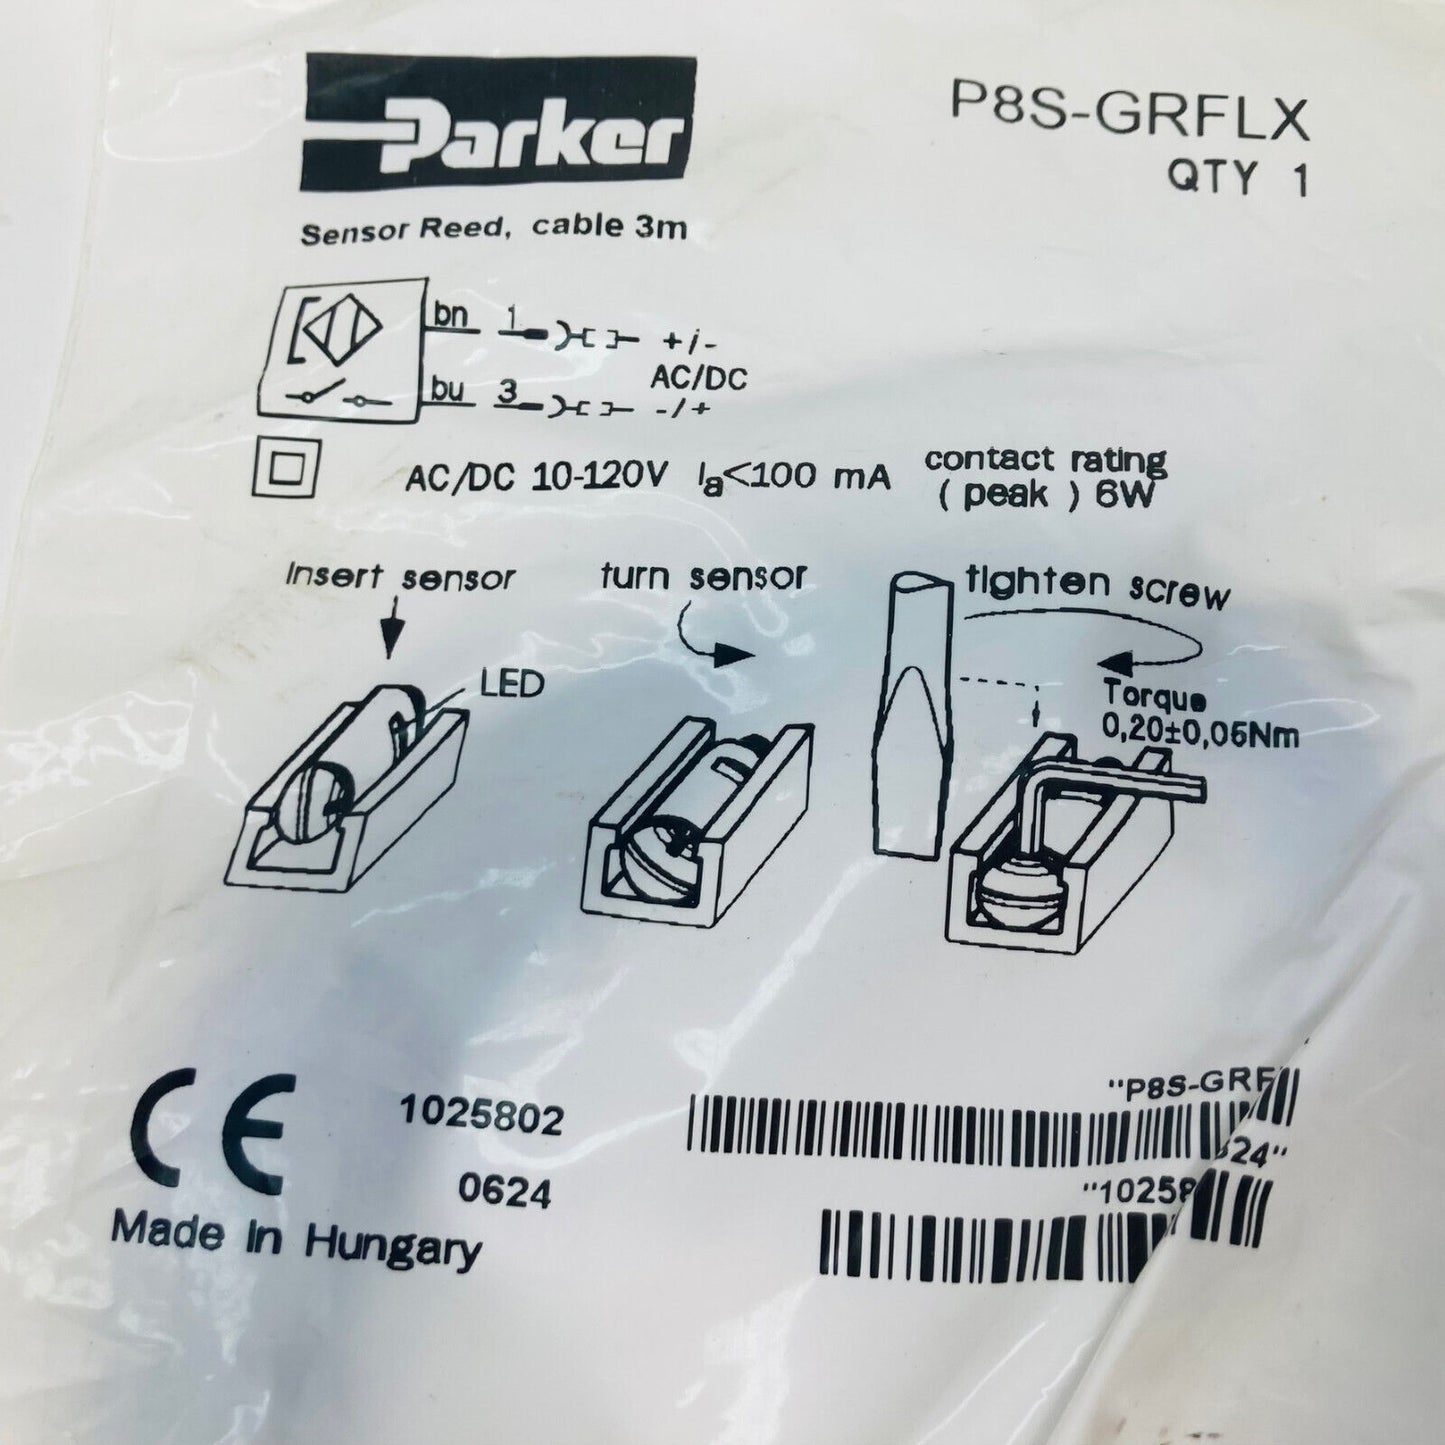 New Parker P8S-GRFLX Sensor Reed, 3m